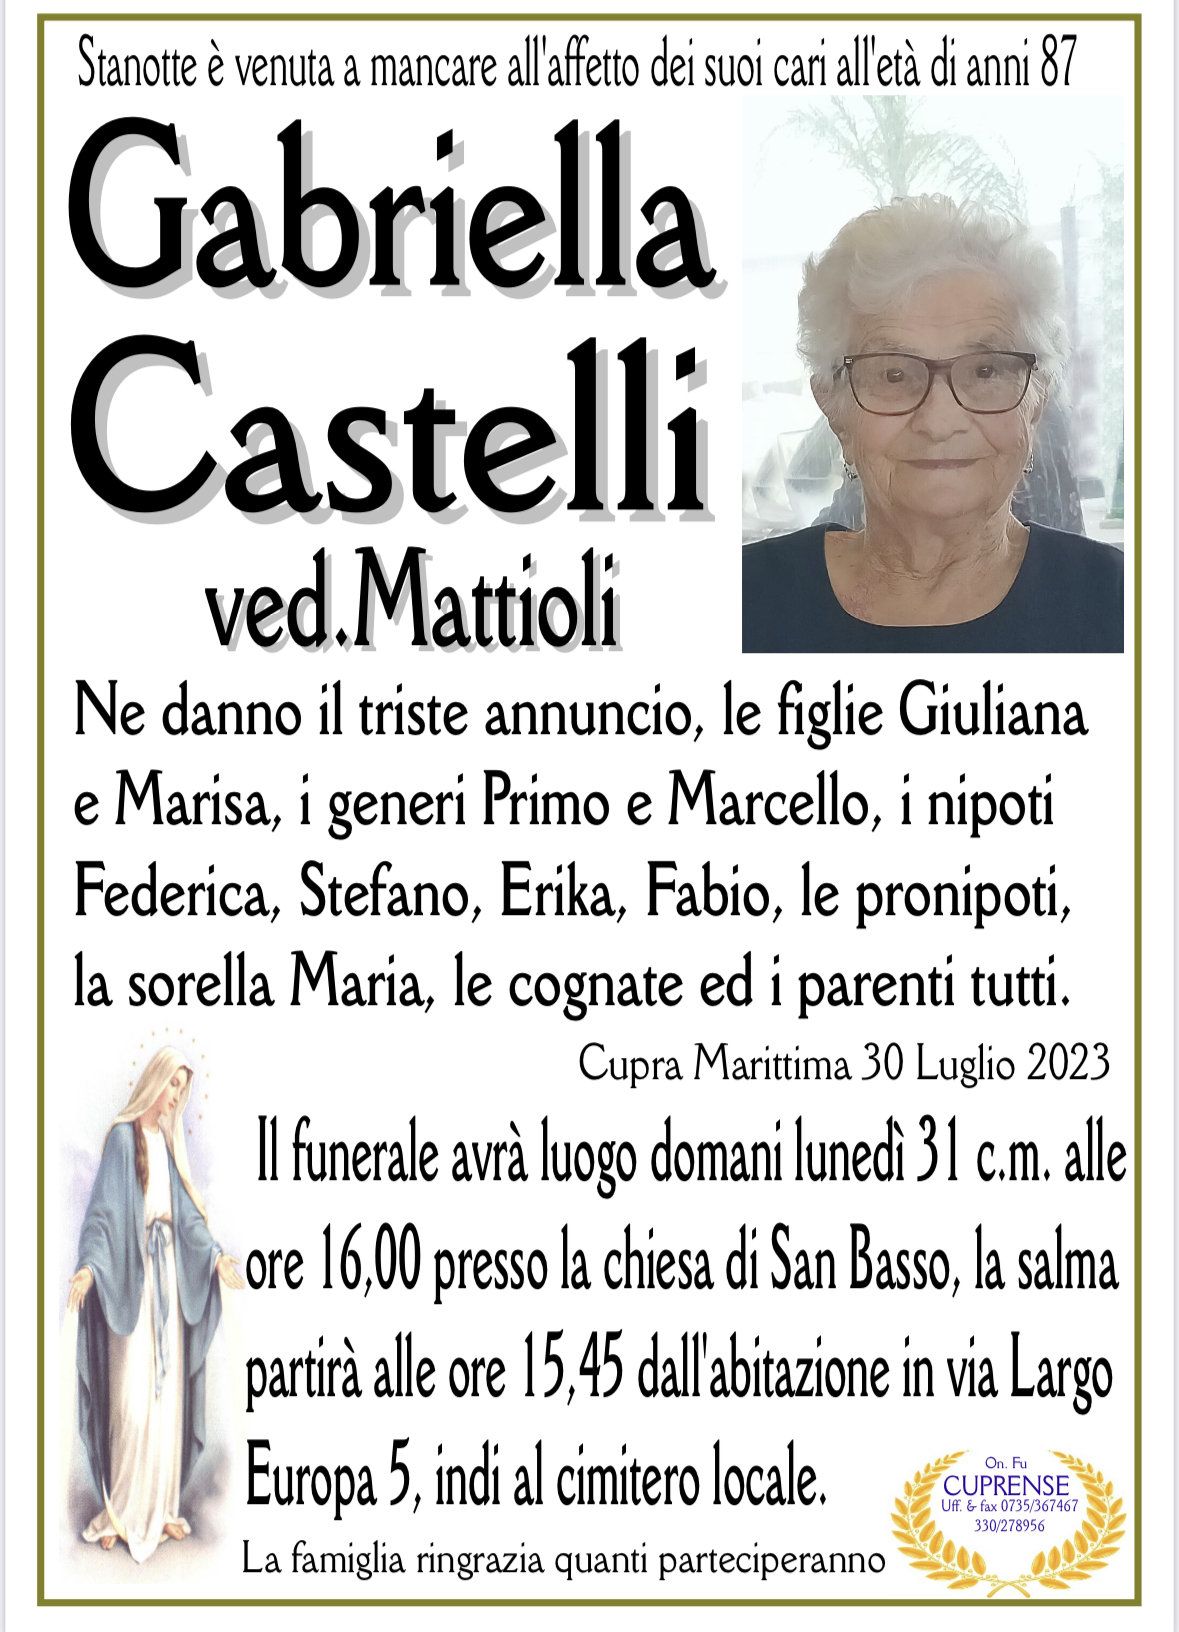 Gabriella Castelli